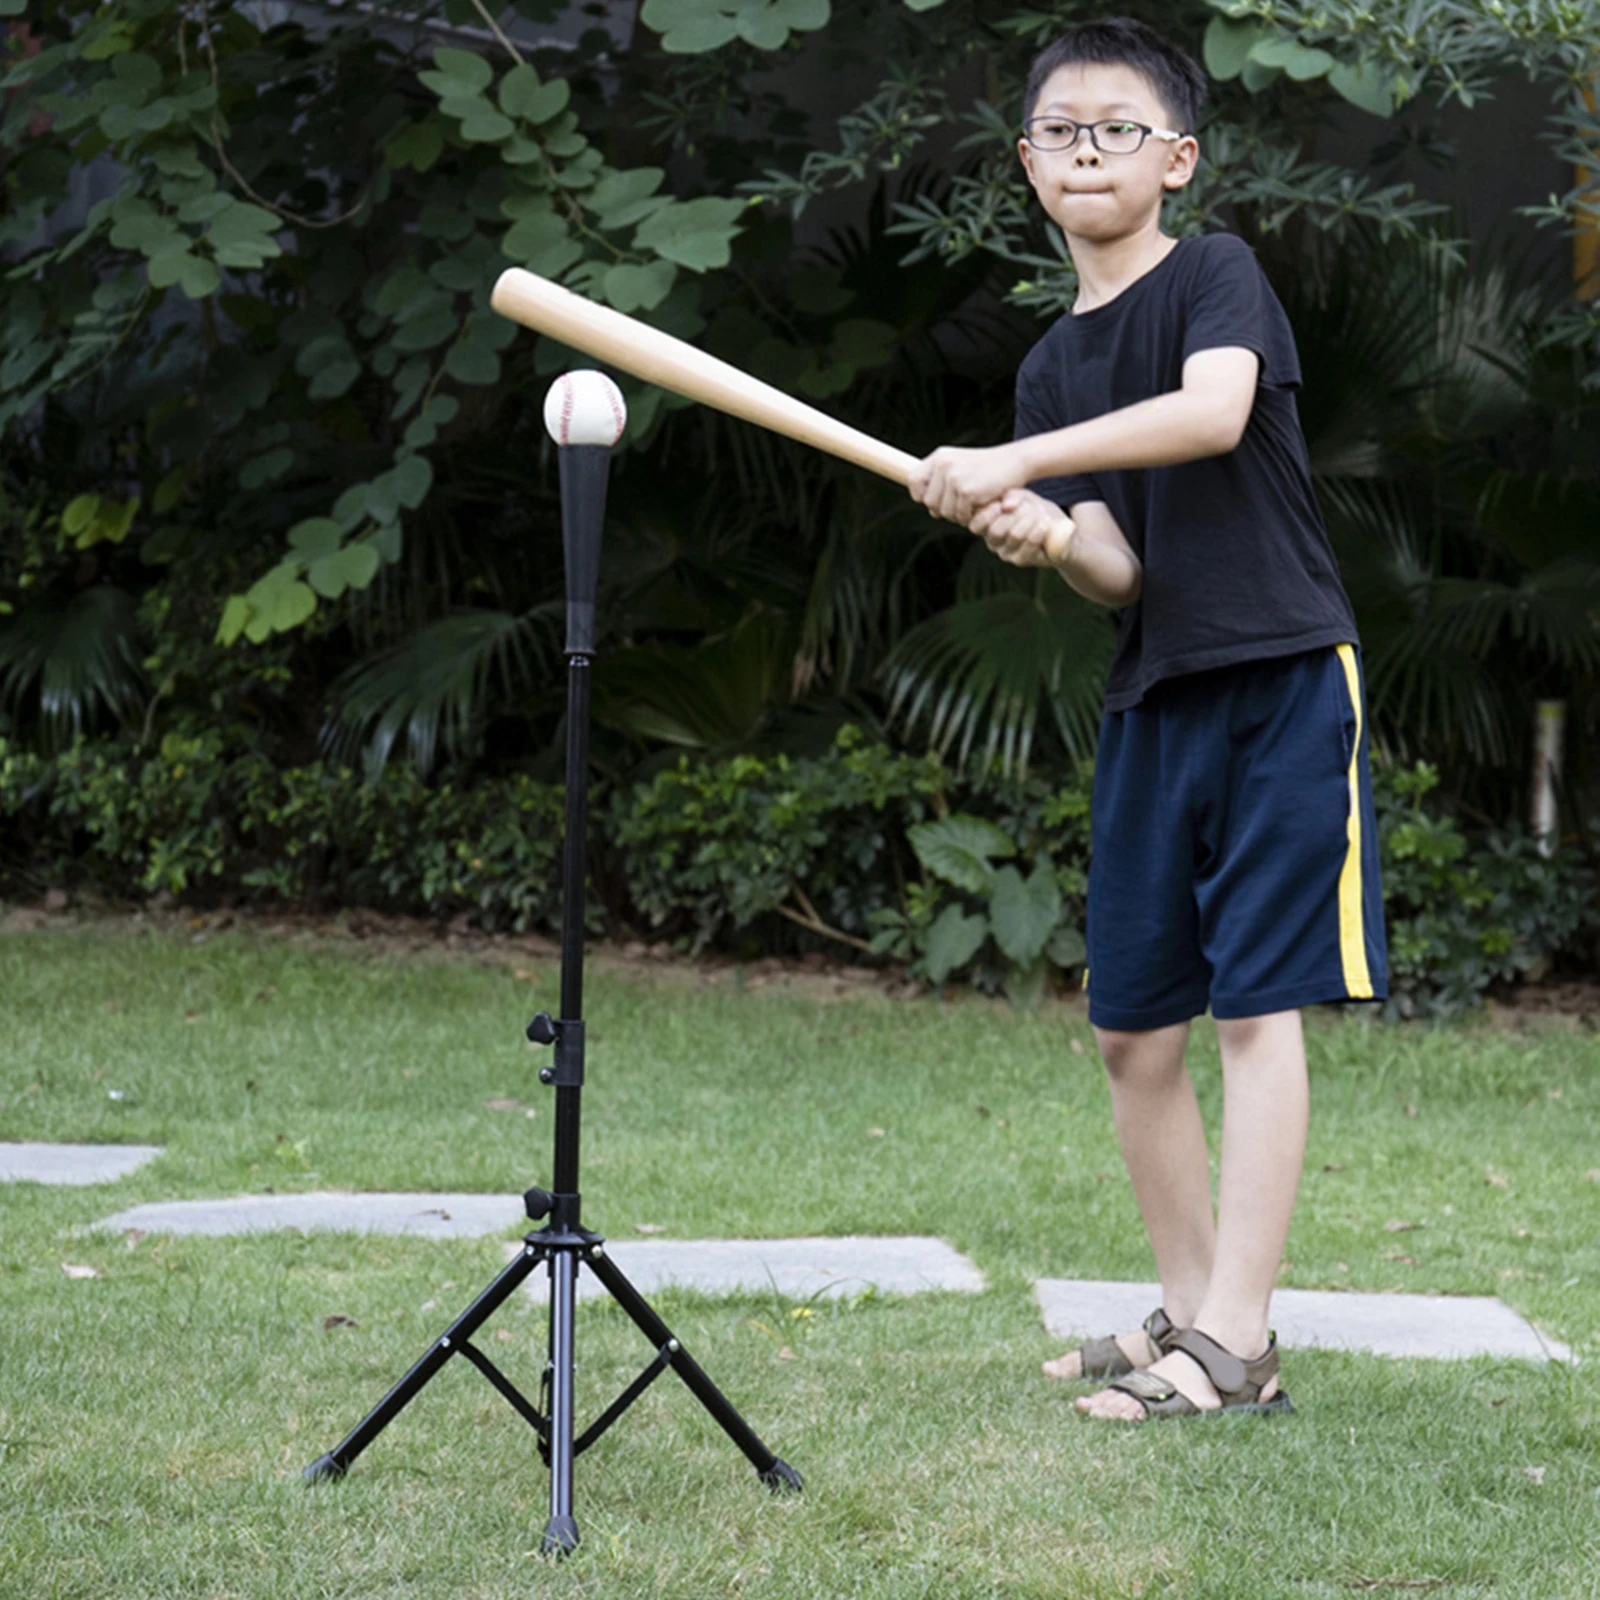 Outdoor Baseball Tee Batting Tripod T Stand Training Mount Adjustable Hitting Tee Softball Practice Ball Accessories Plastic